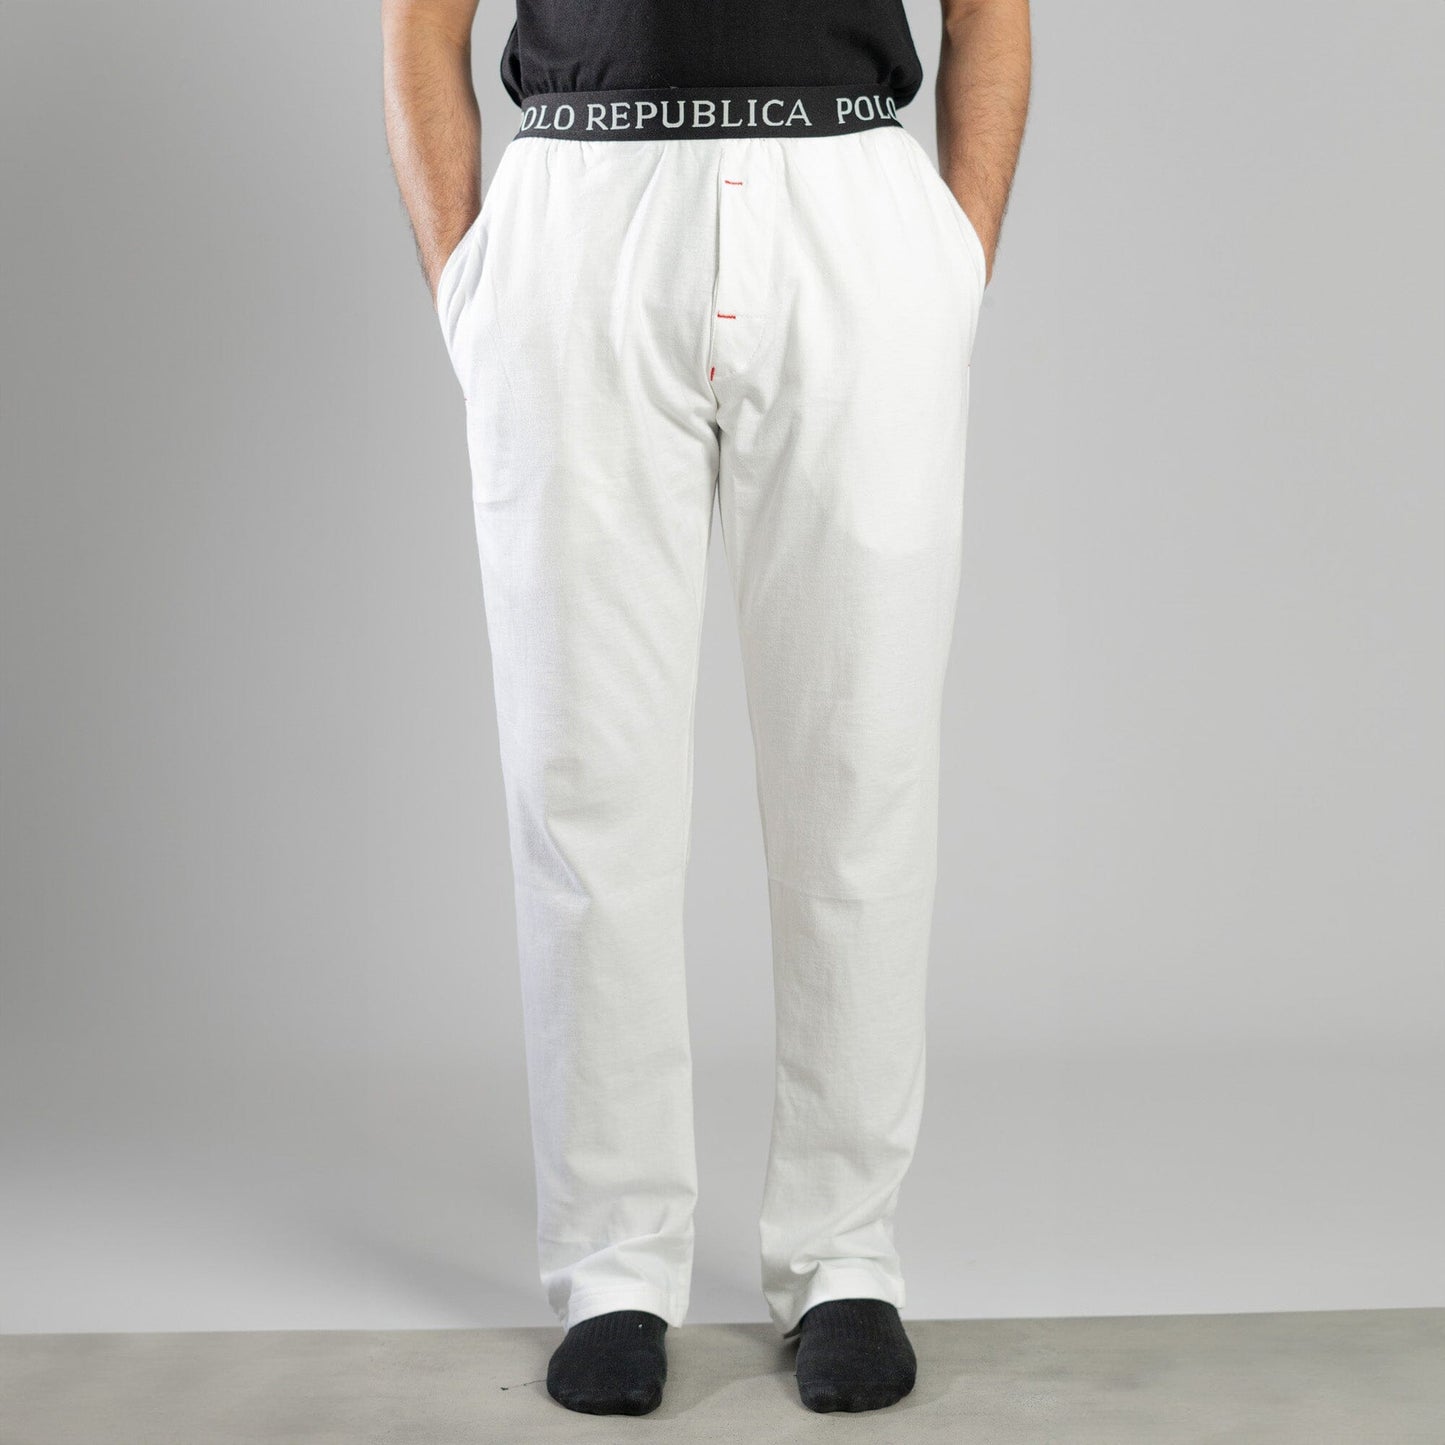 Polo Republica Men's Essentials Jersey Lounge Pants Men's Trousers Polo Republica White S 